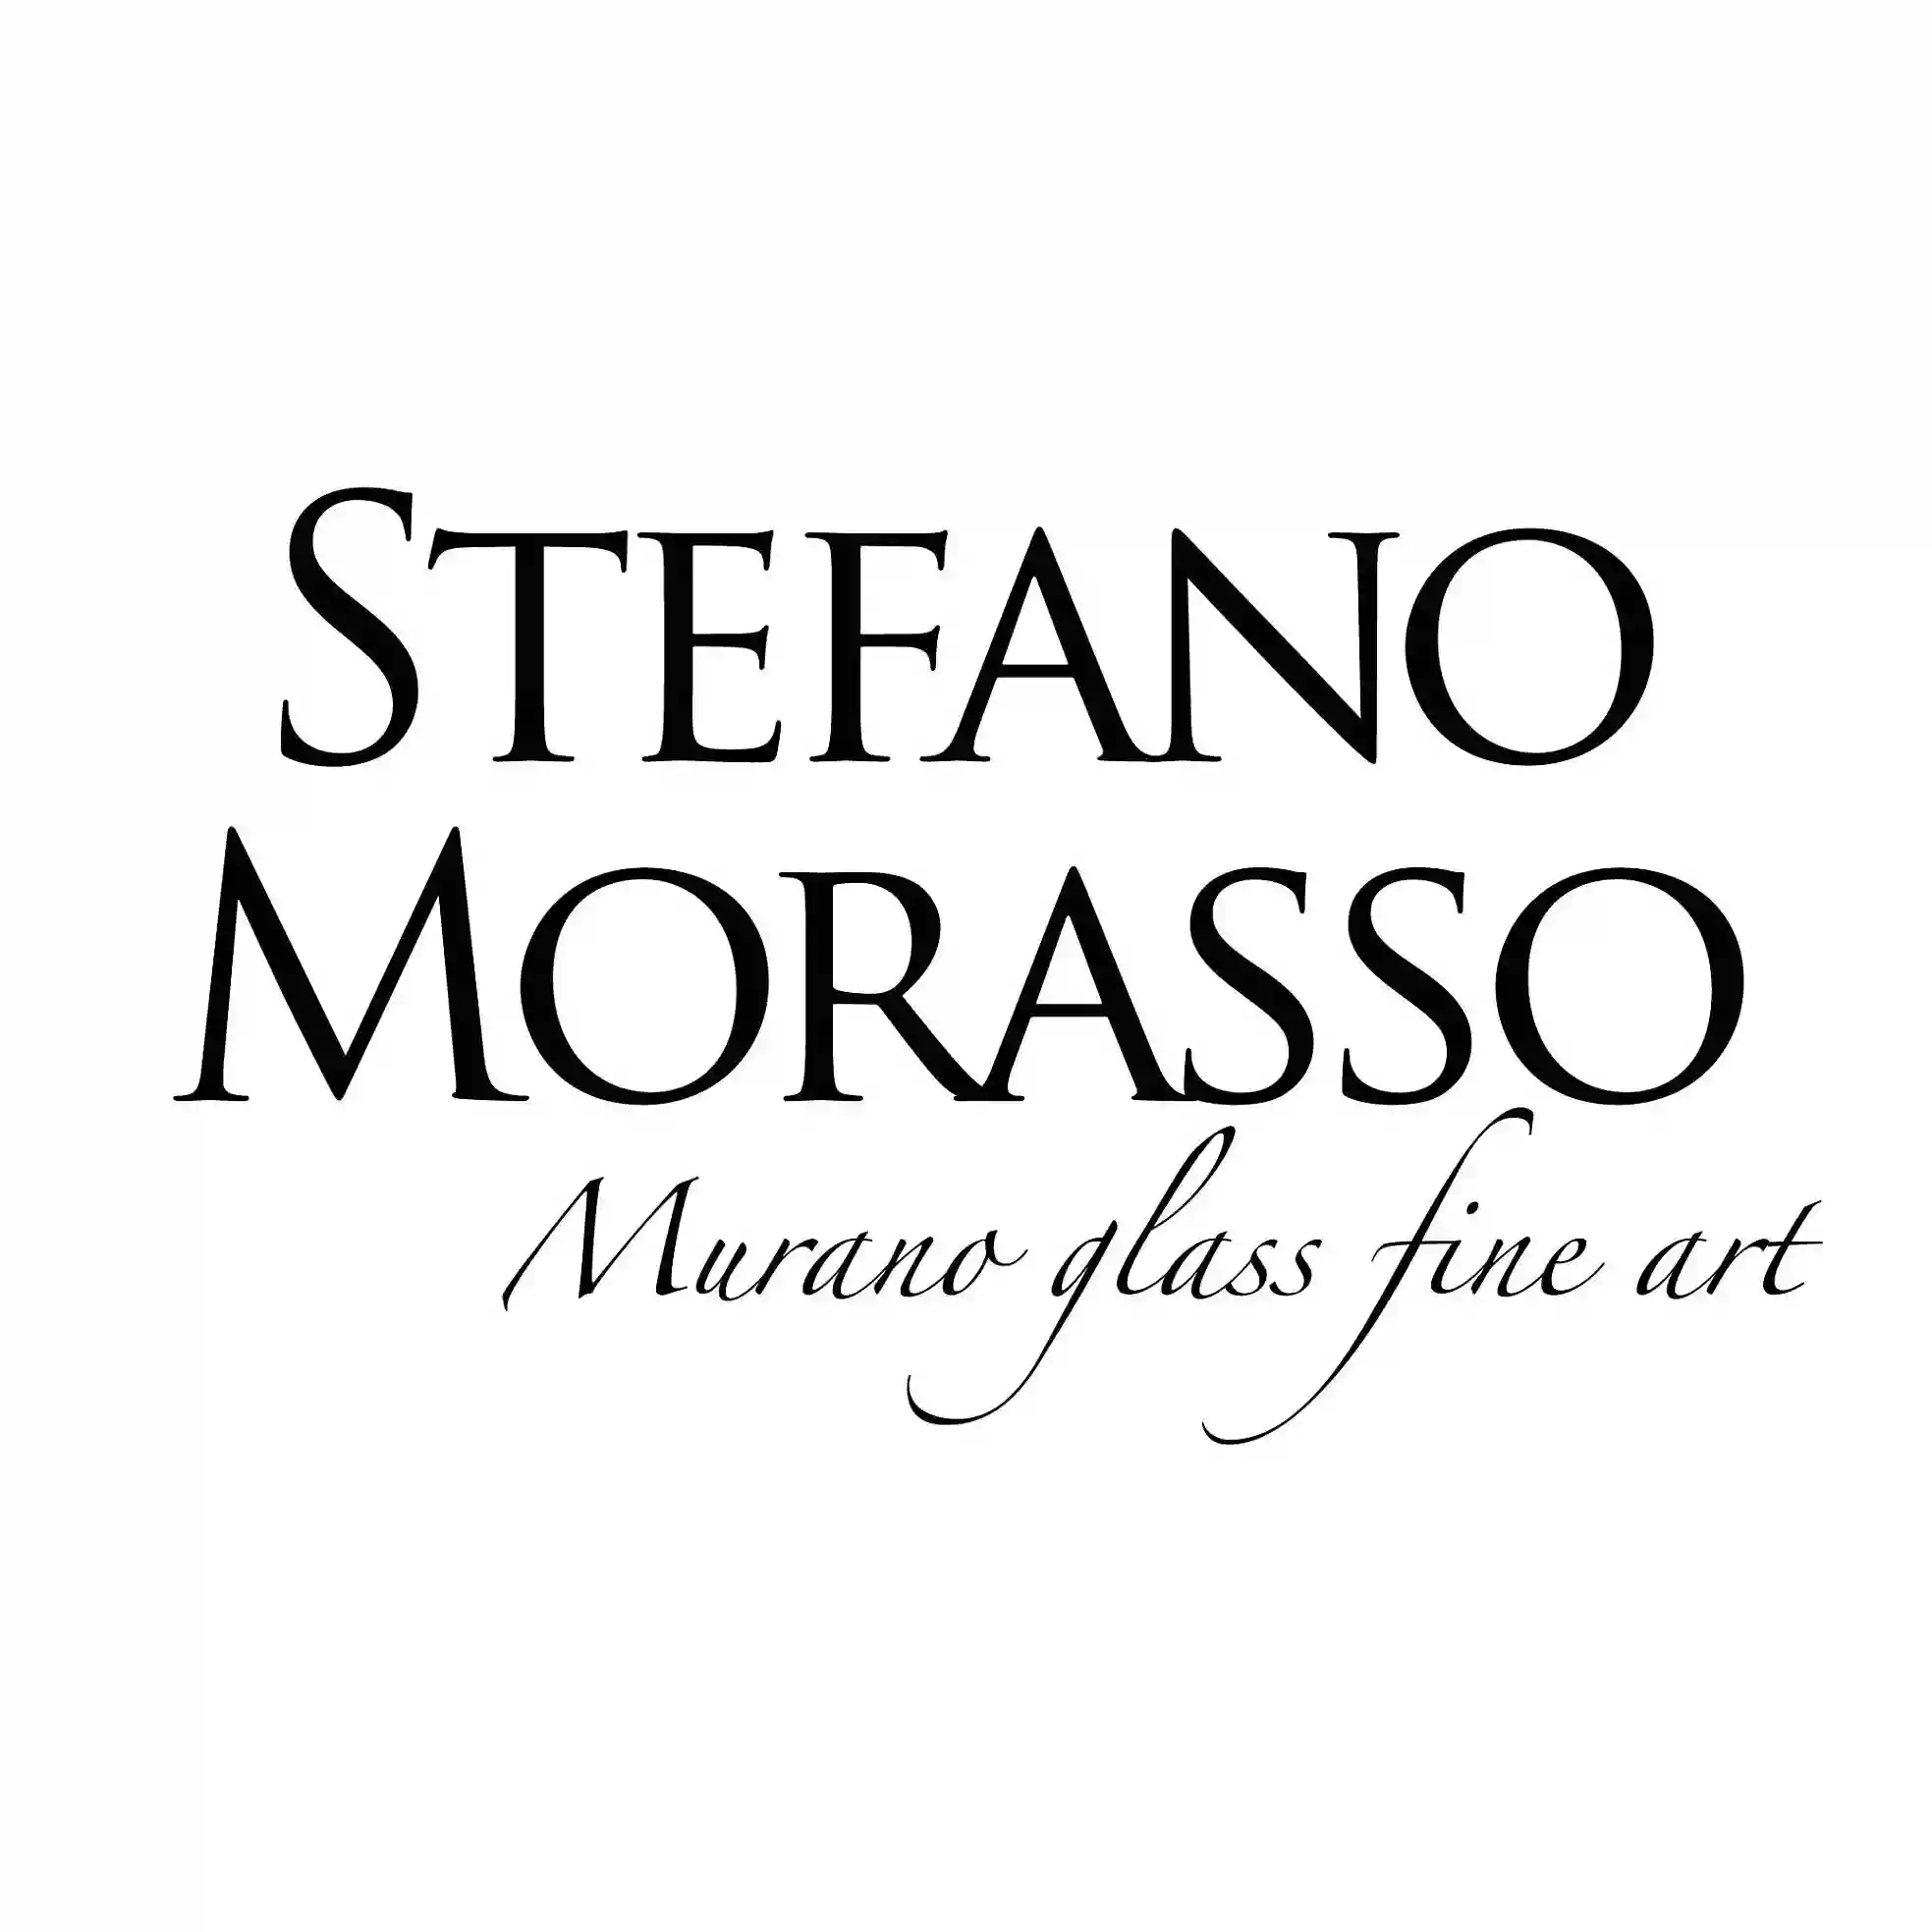 Murano Glass Fine Art Stefano Morasso Studio